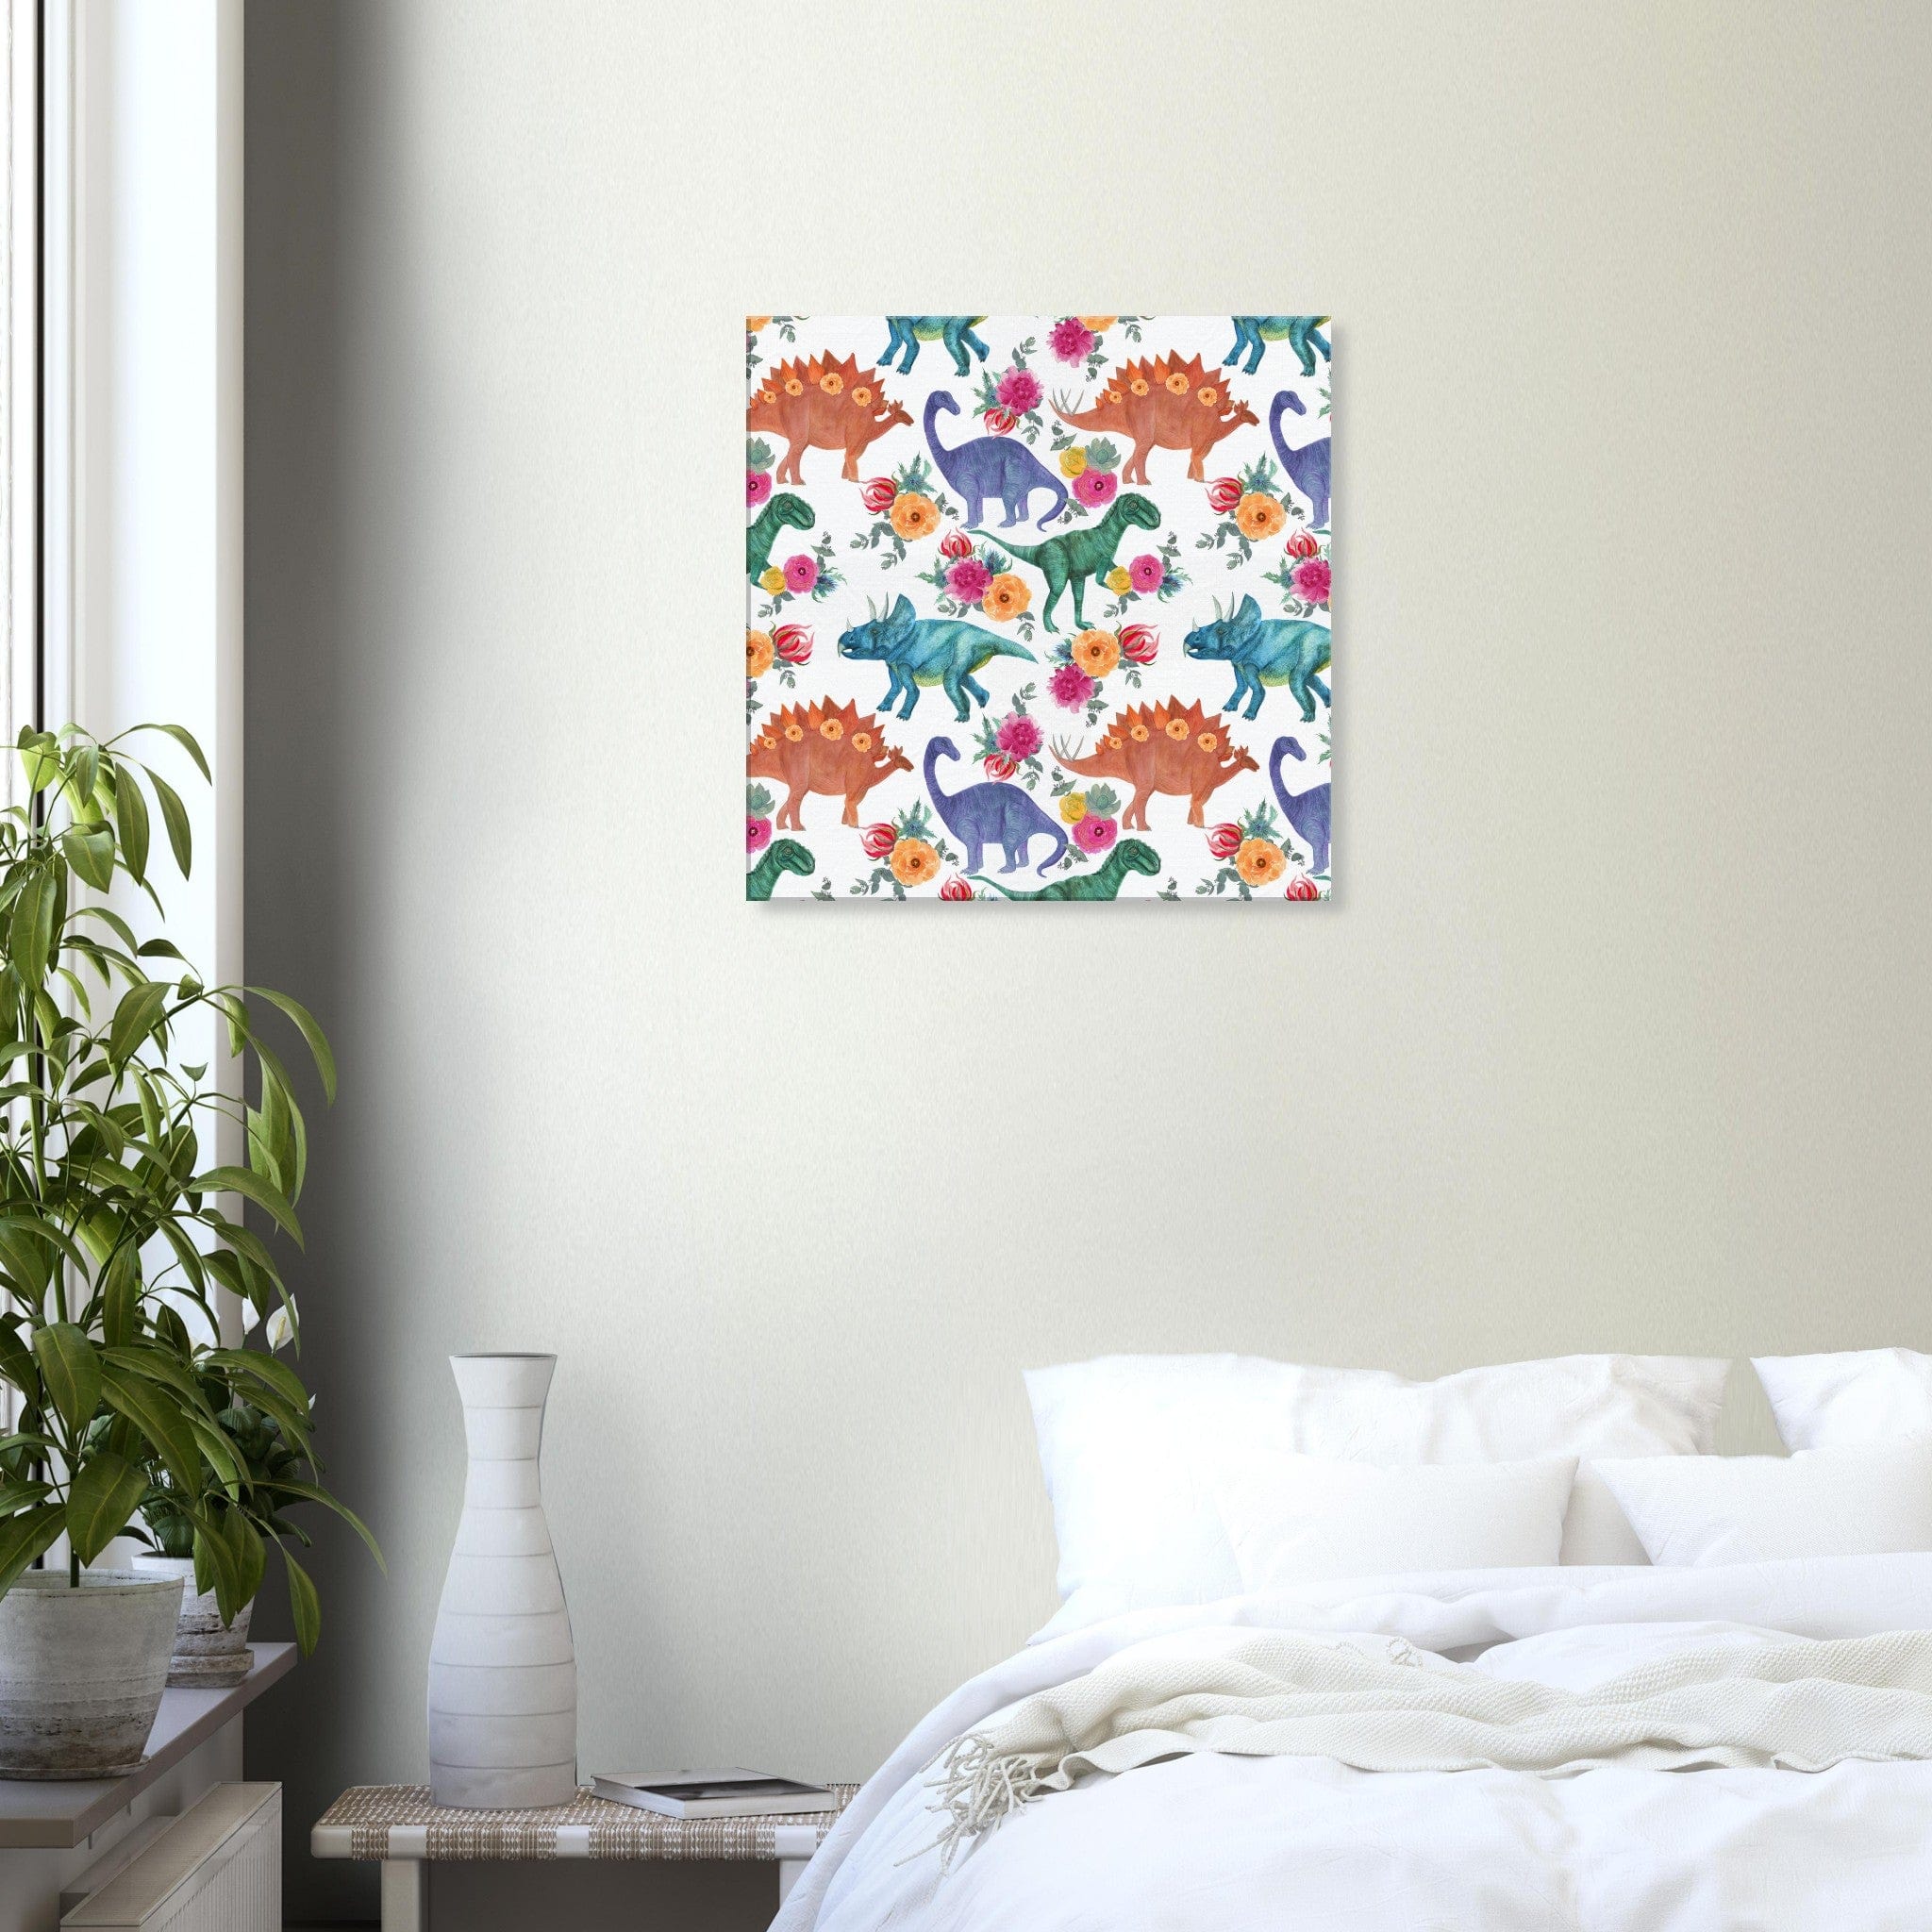 Little Squiffy Print Material 60x60 cm / 24x24″ / Horizontal Floral Dinosaurs Canvas Wall Art